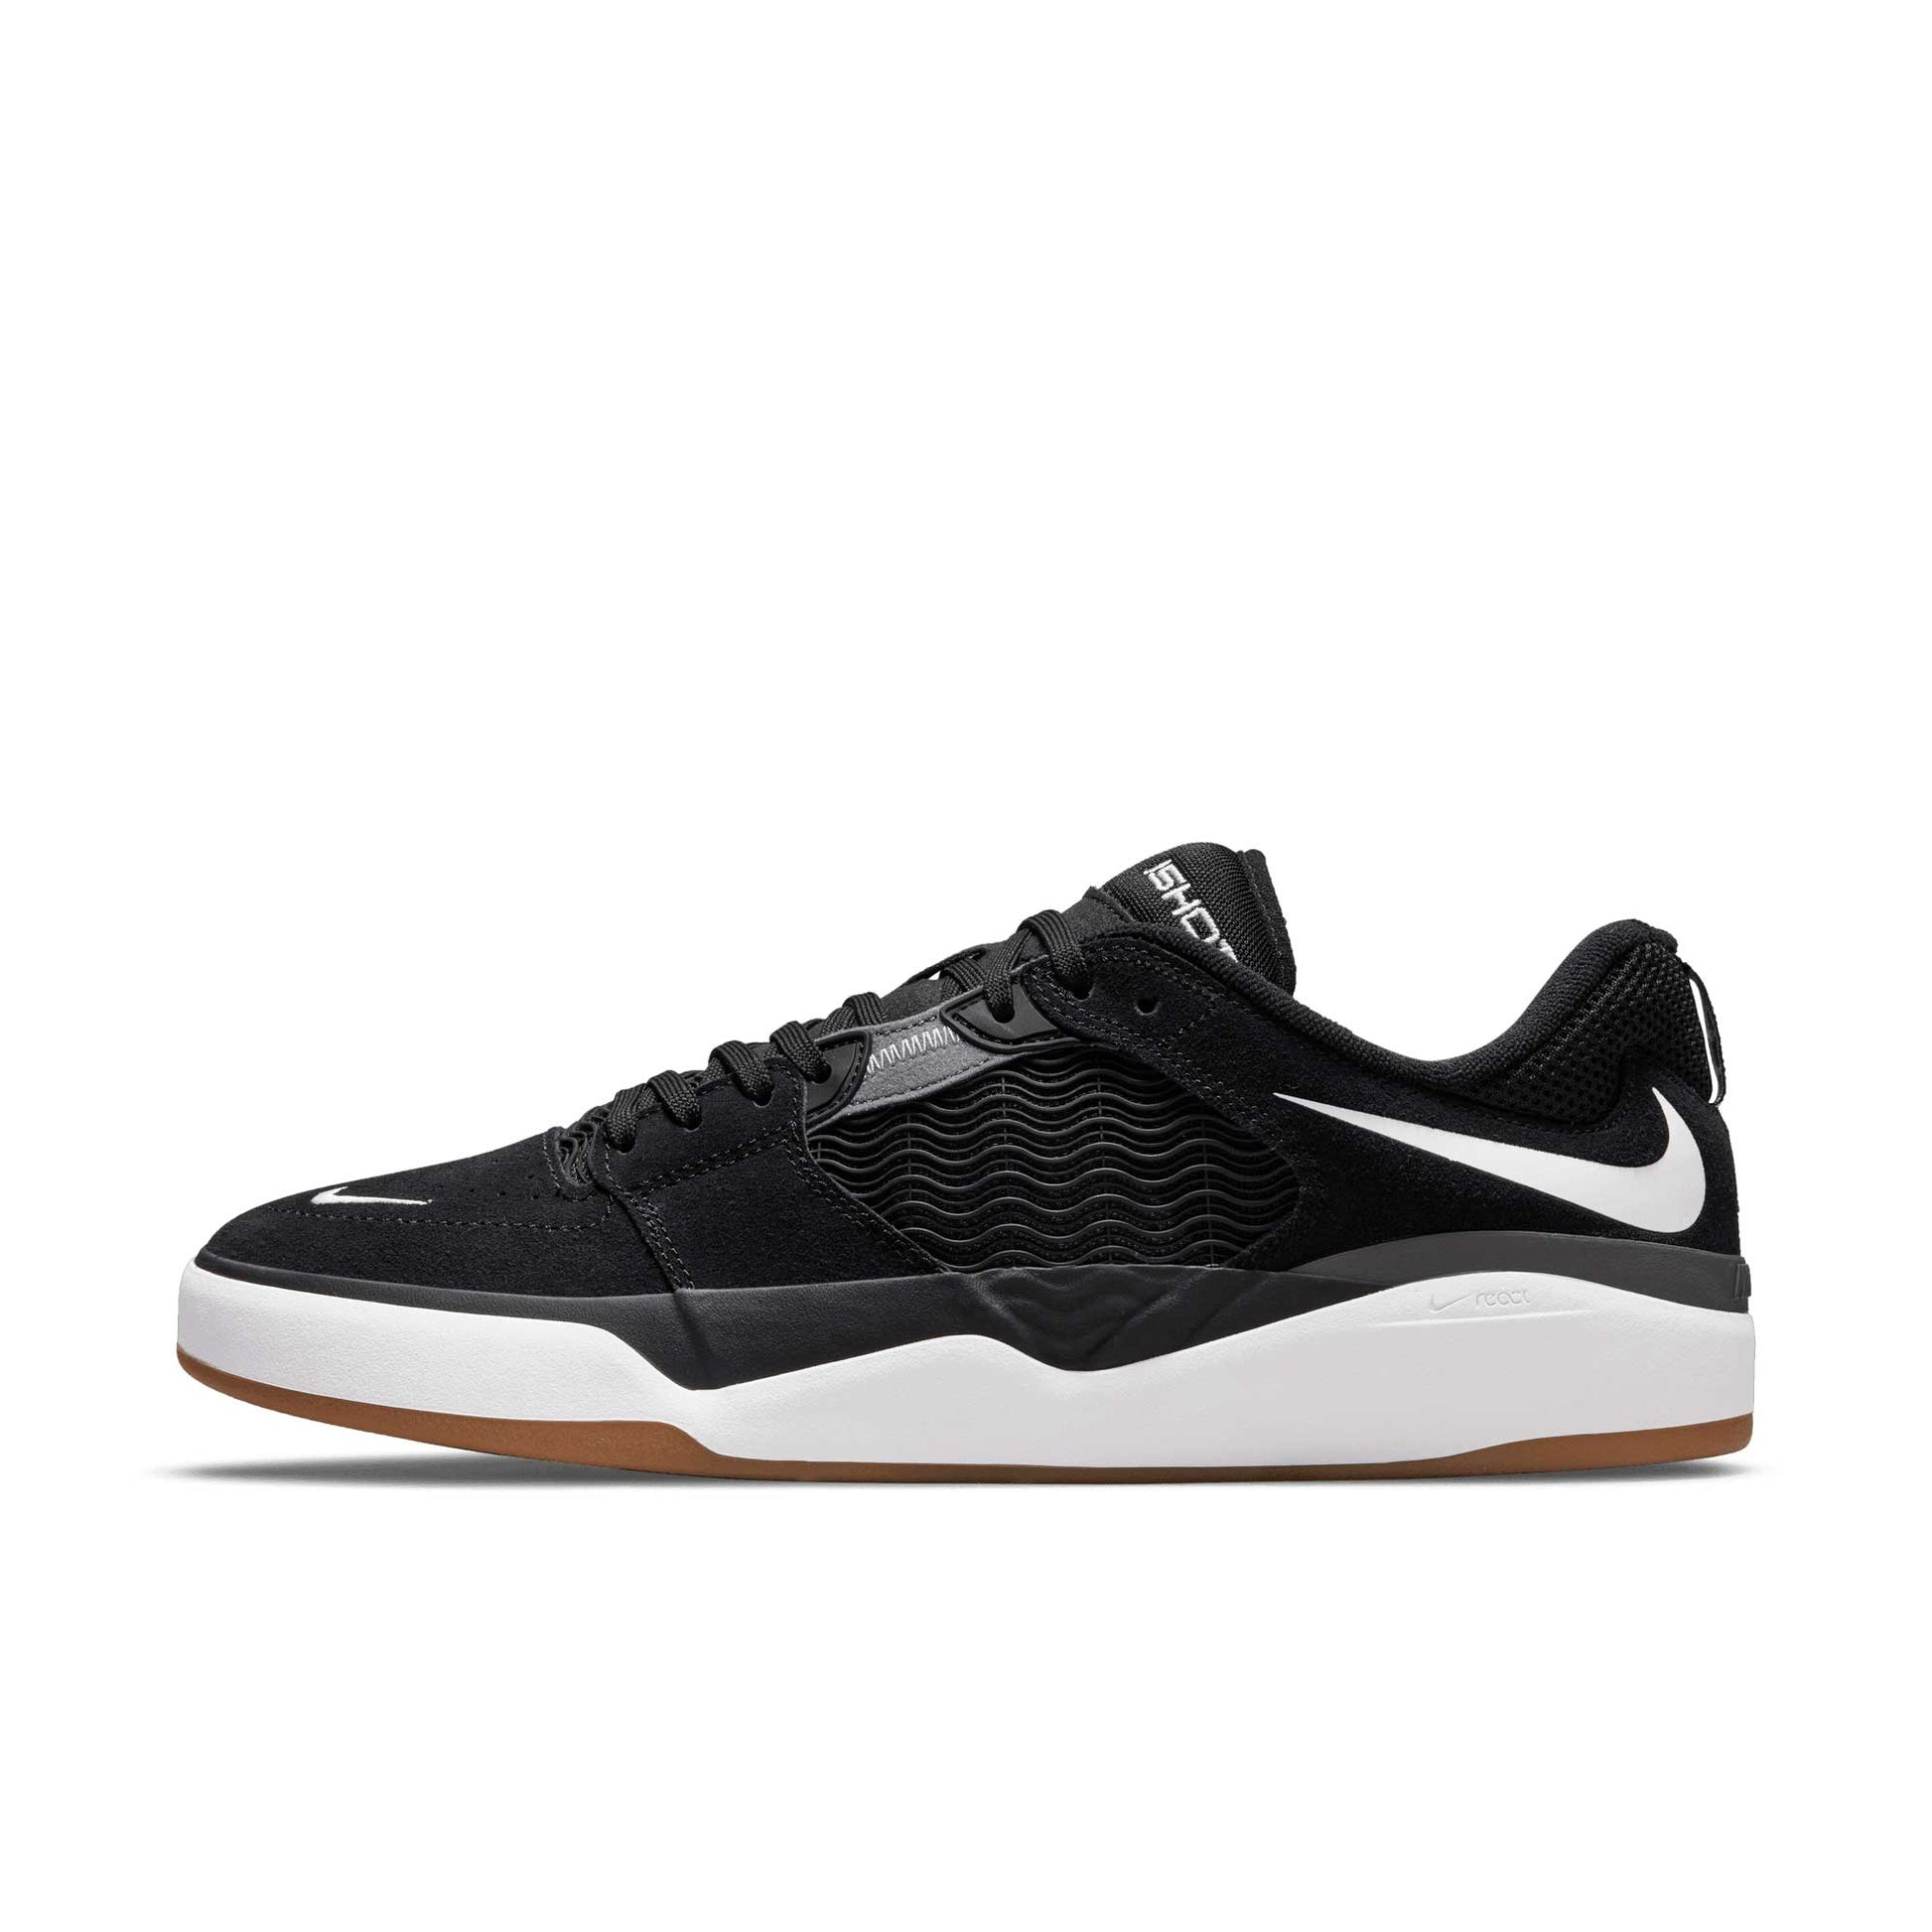 Nike SB Ishod Wair, black/white-dark grey-black - Tiki Room Skateboards - 8